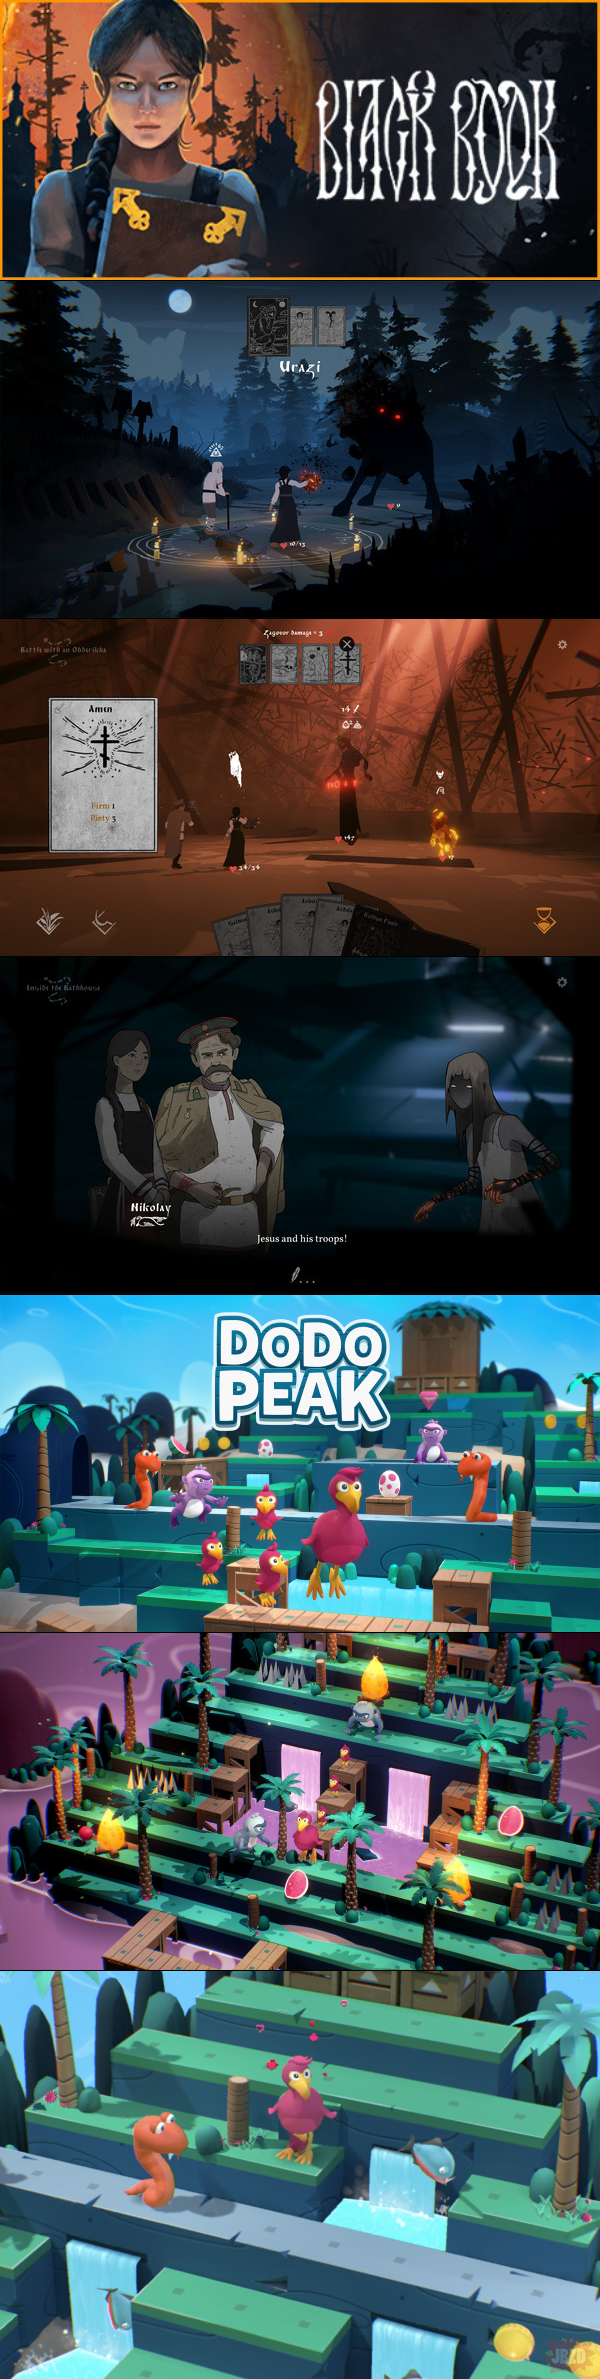 Black Book i Dodo Peak za darmo w Free Games Store